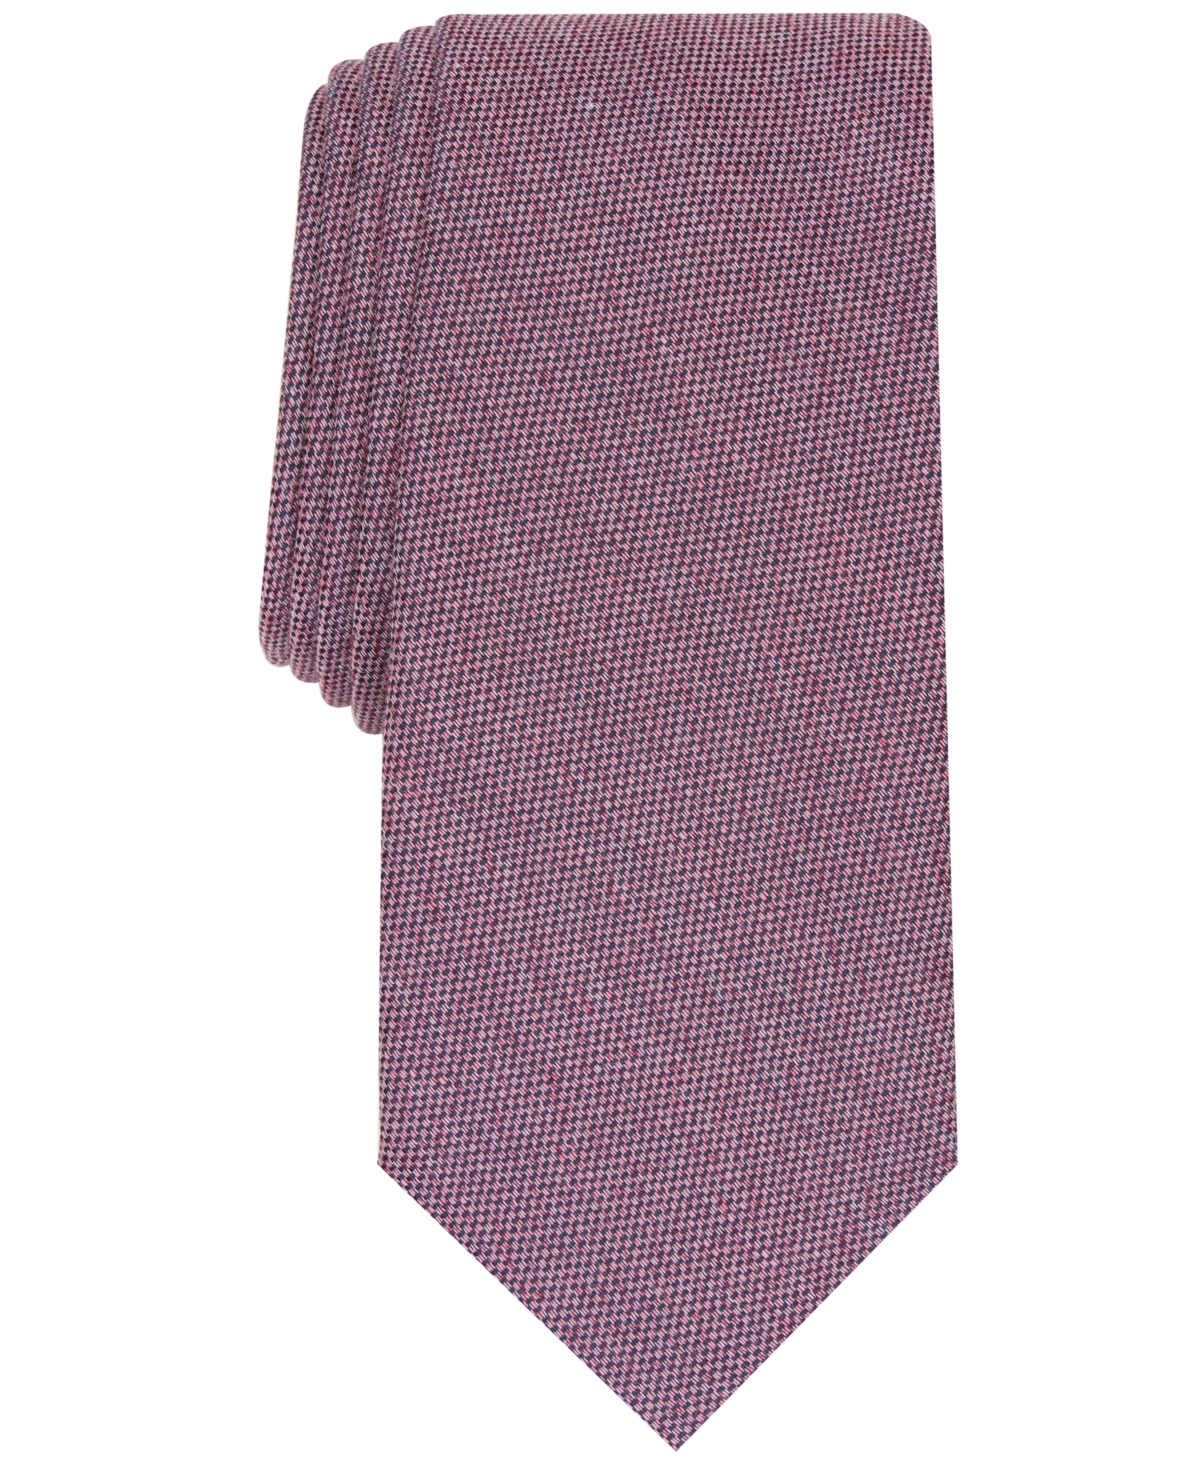 Men's Dunbar Solid Slim Tie, Created for Macy's - Light Pink